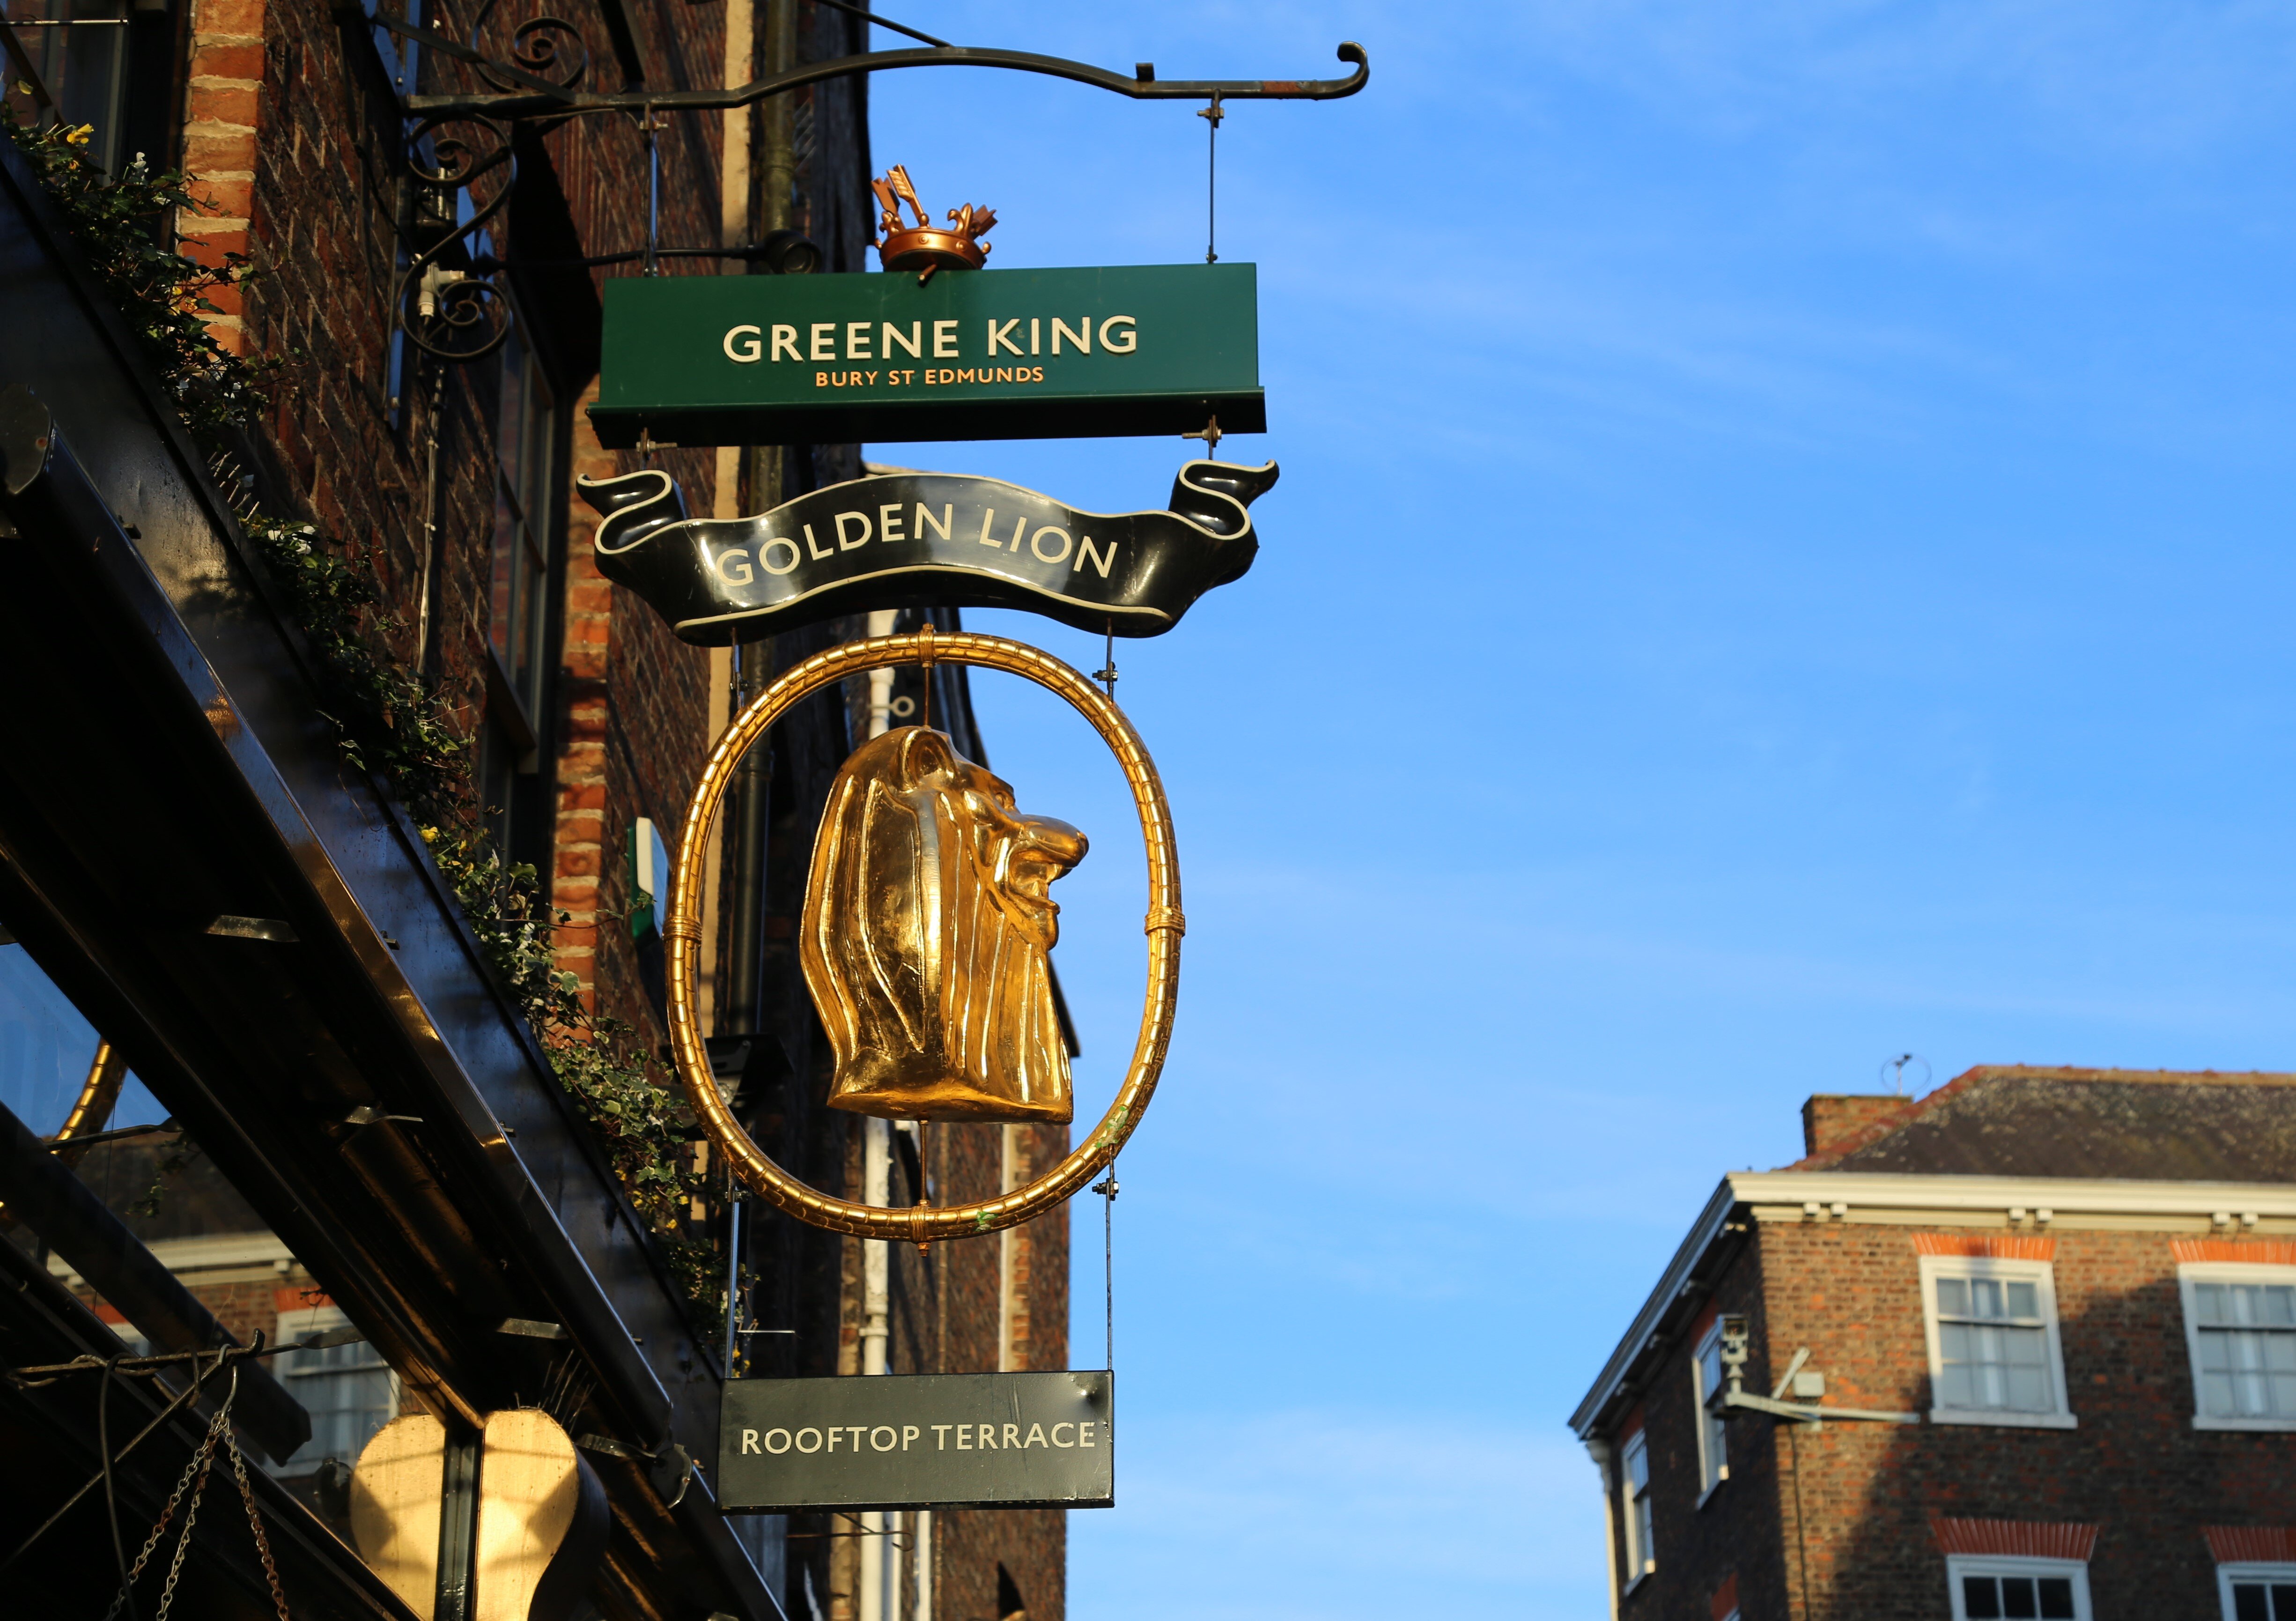 Greene King reports revenue of £2.18b